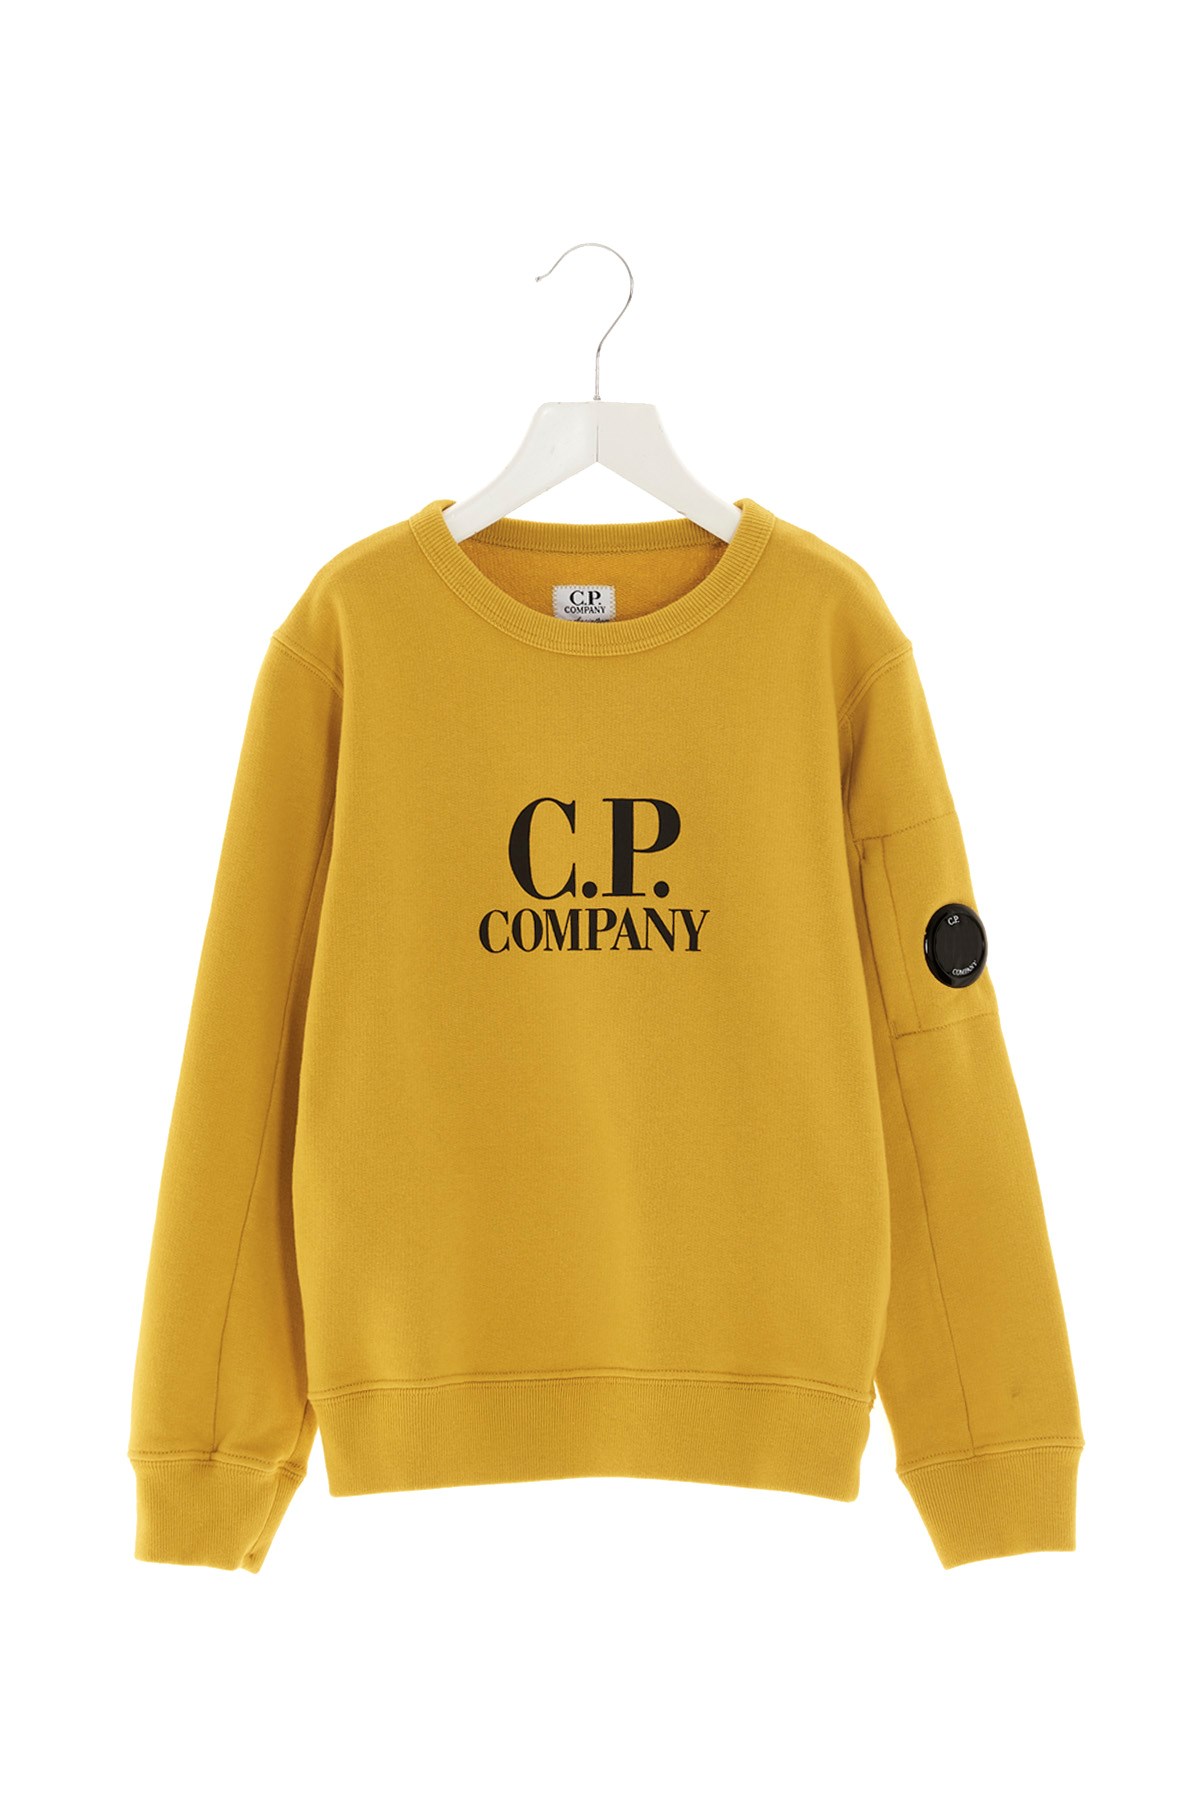 C.P. COMPANY Sweatshirt Mit Logo-Druck